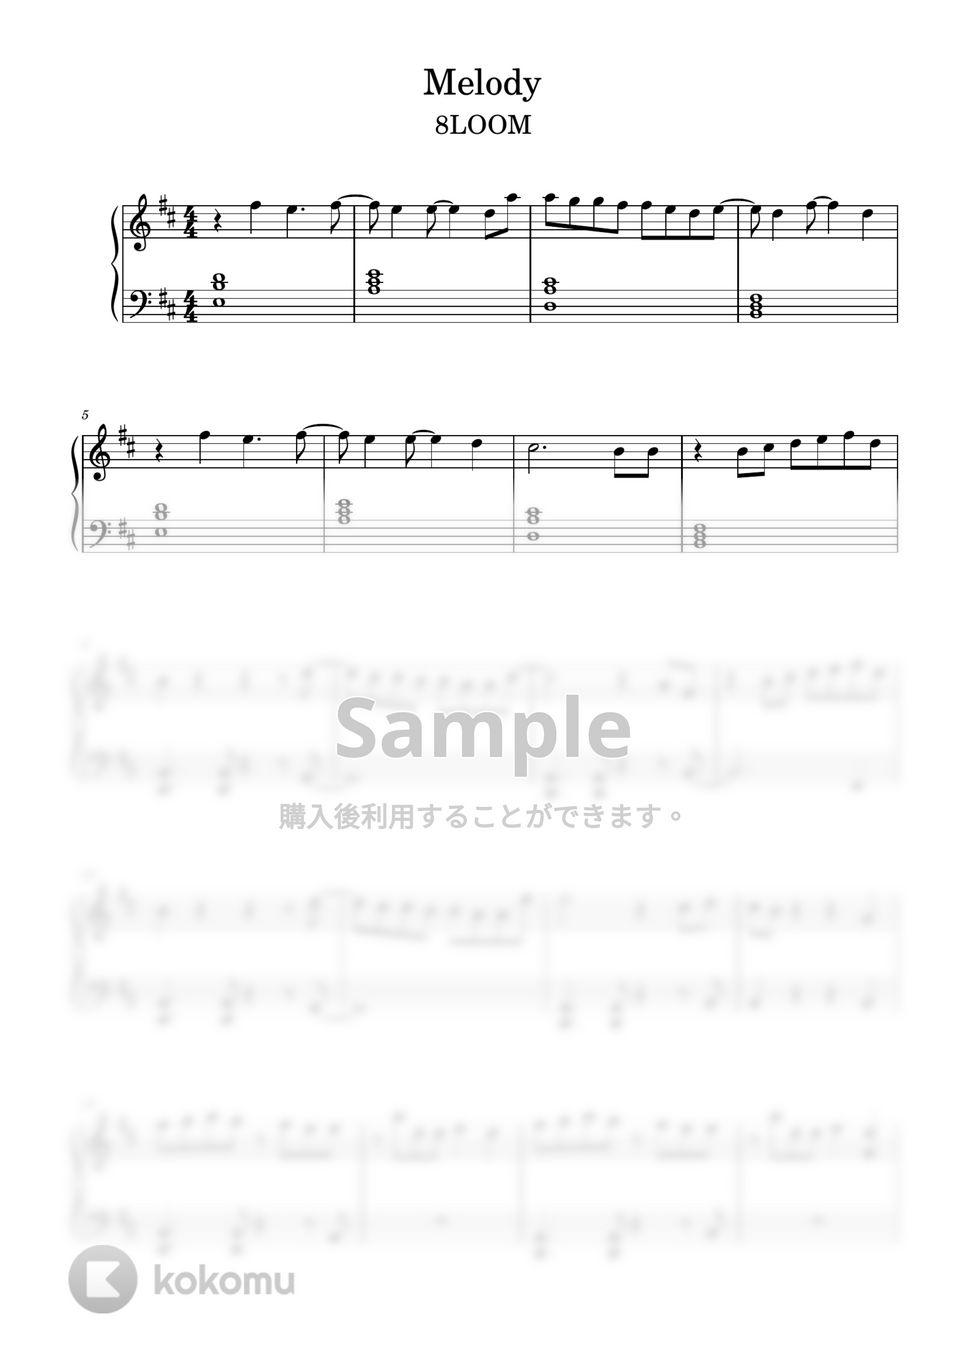 8LOOM - Melody (ピアノソロ初中級) by pianon楽譜